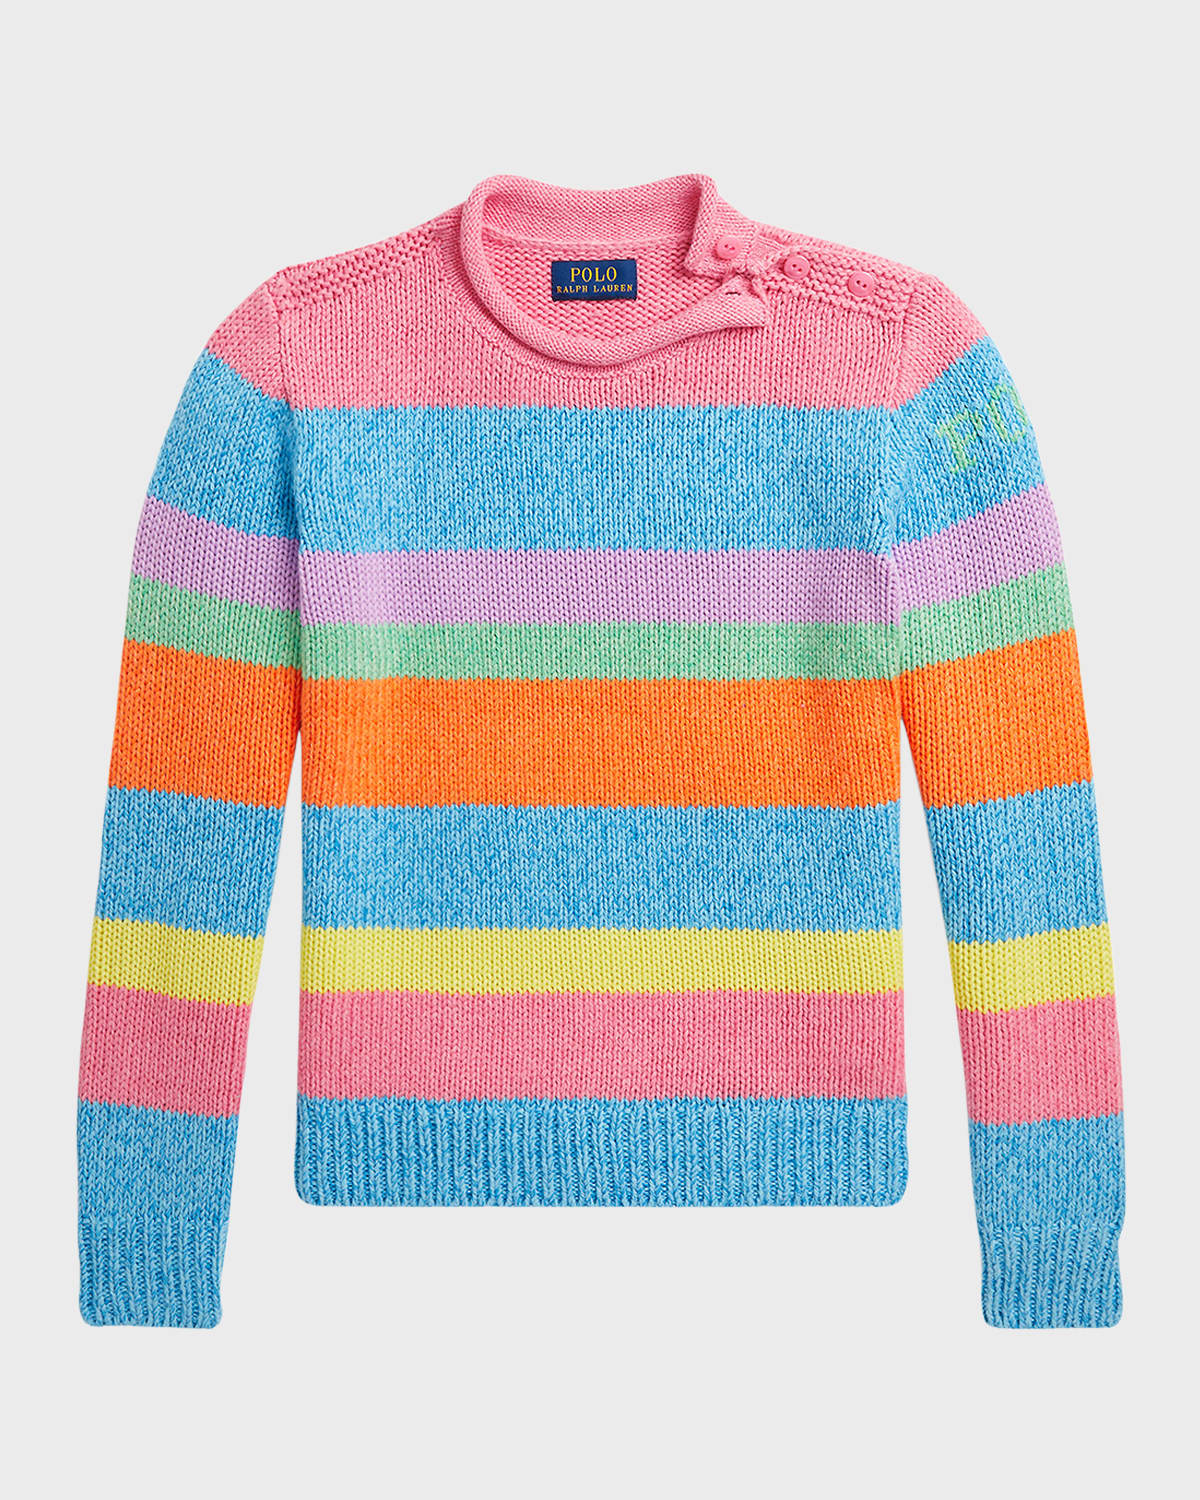 Ralph Lauren Kids' Girl's Multicolor Striped Sweater